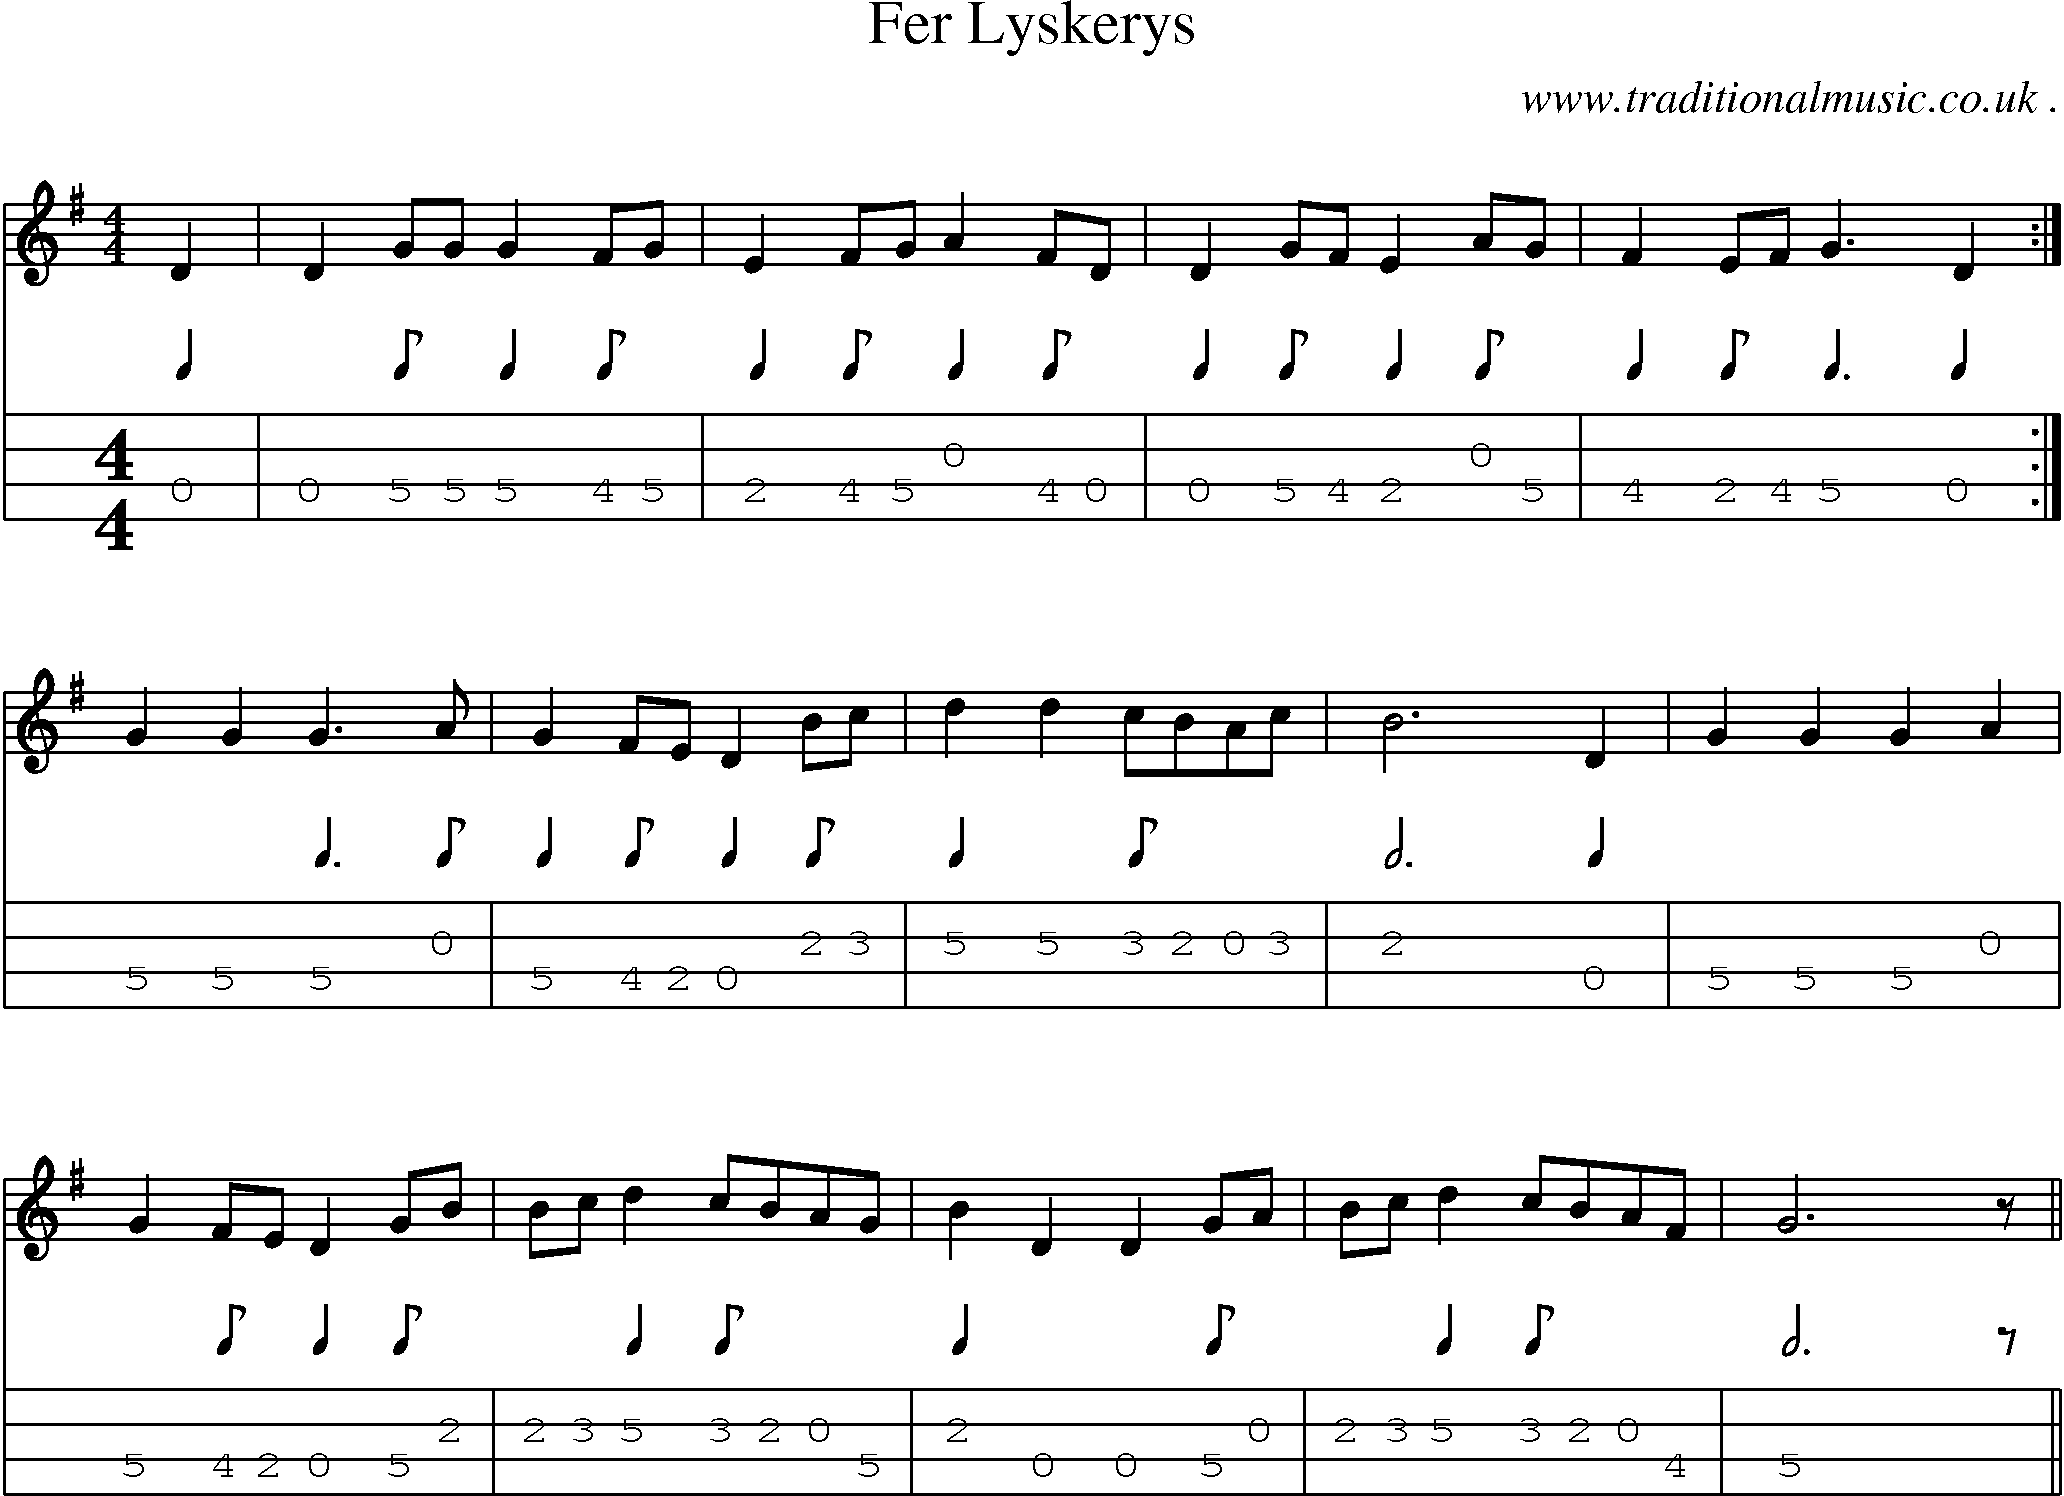 Sheet-Music and Mandolin Tabs for Fer Lyskerys